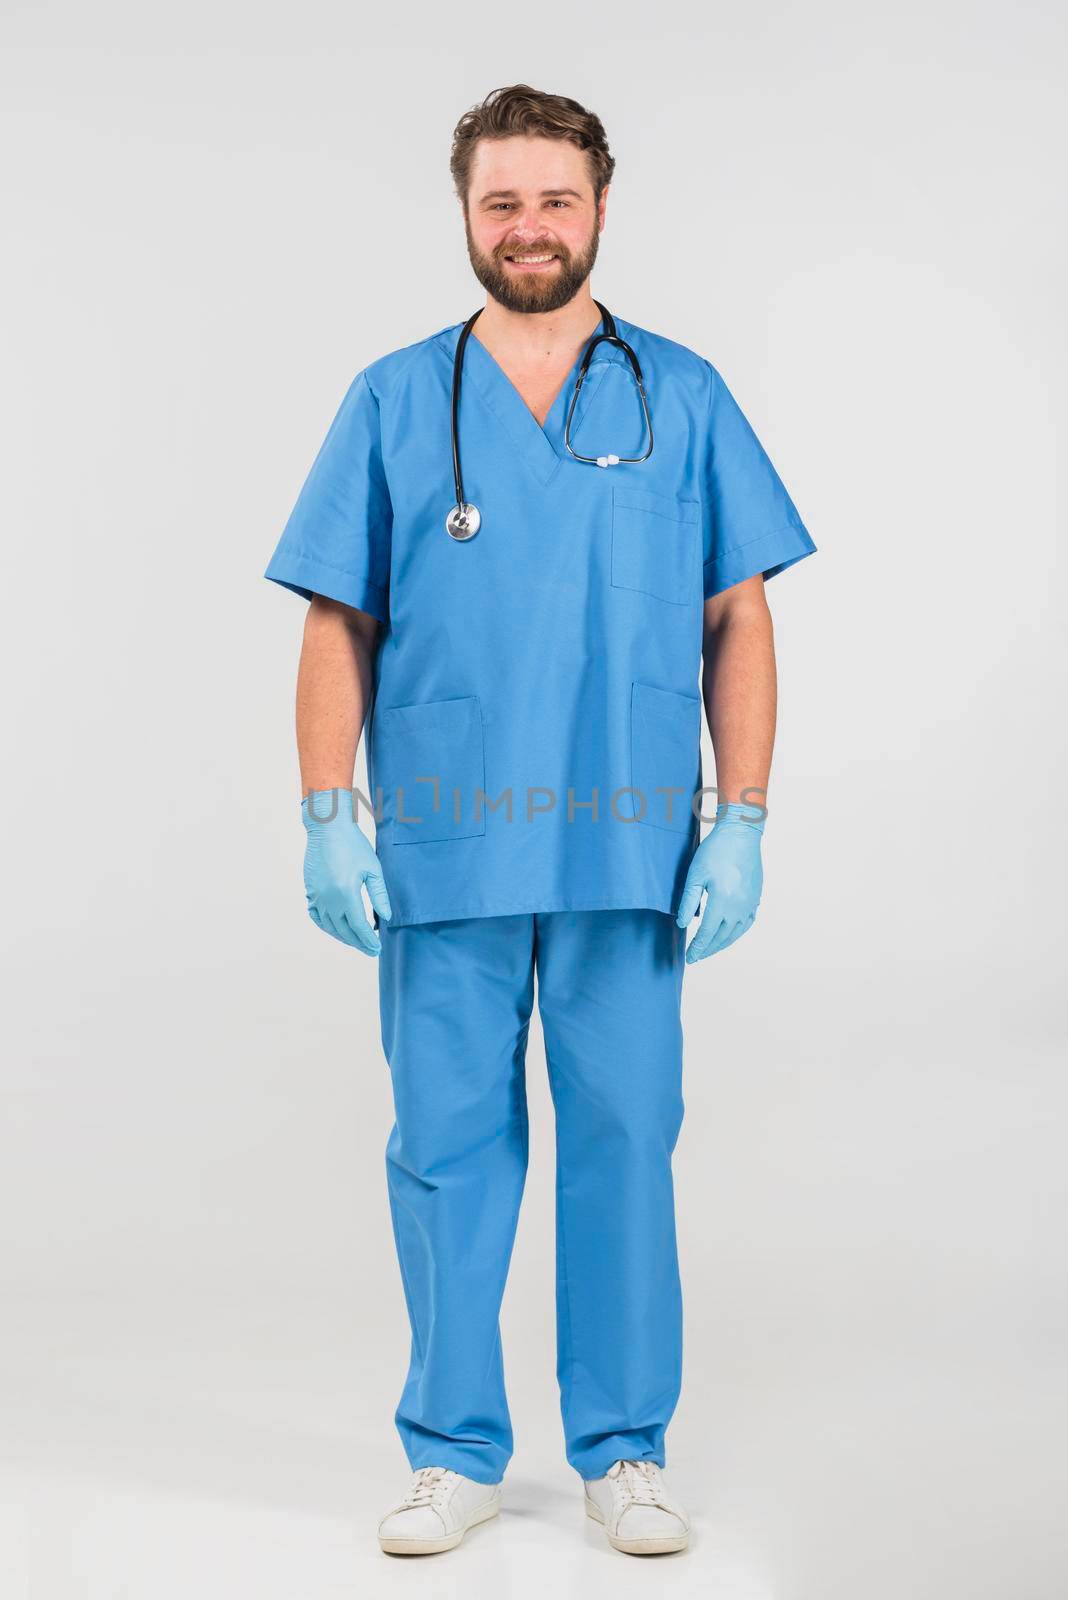 nurse man standing smiling by Zahard